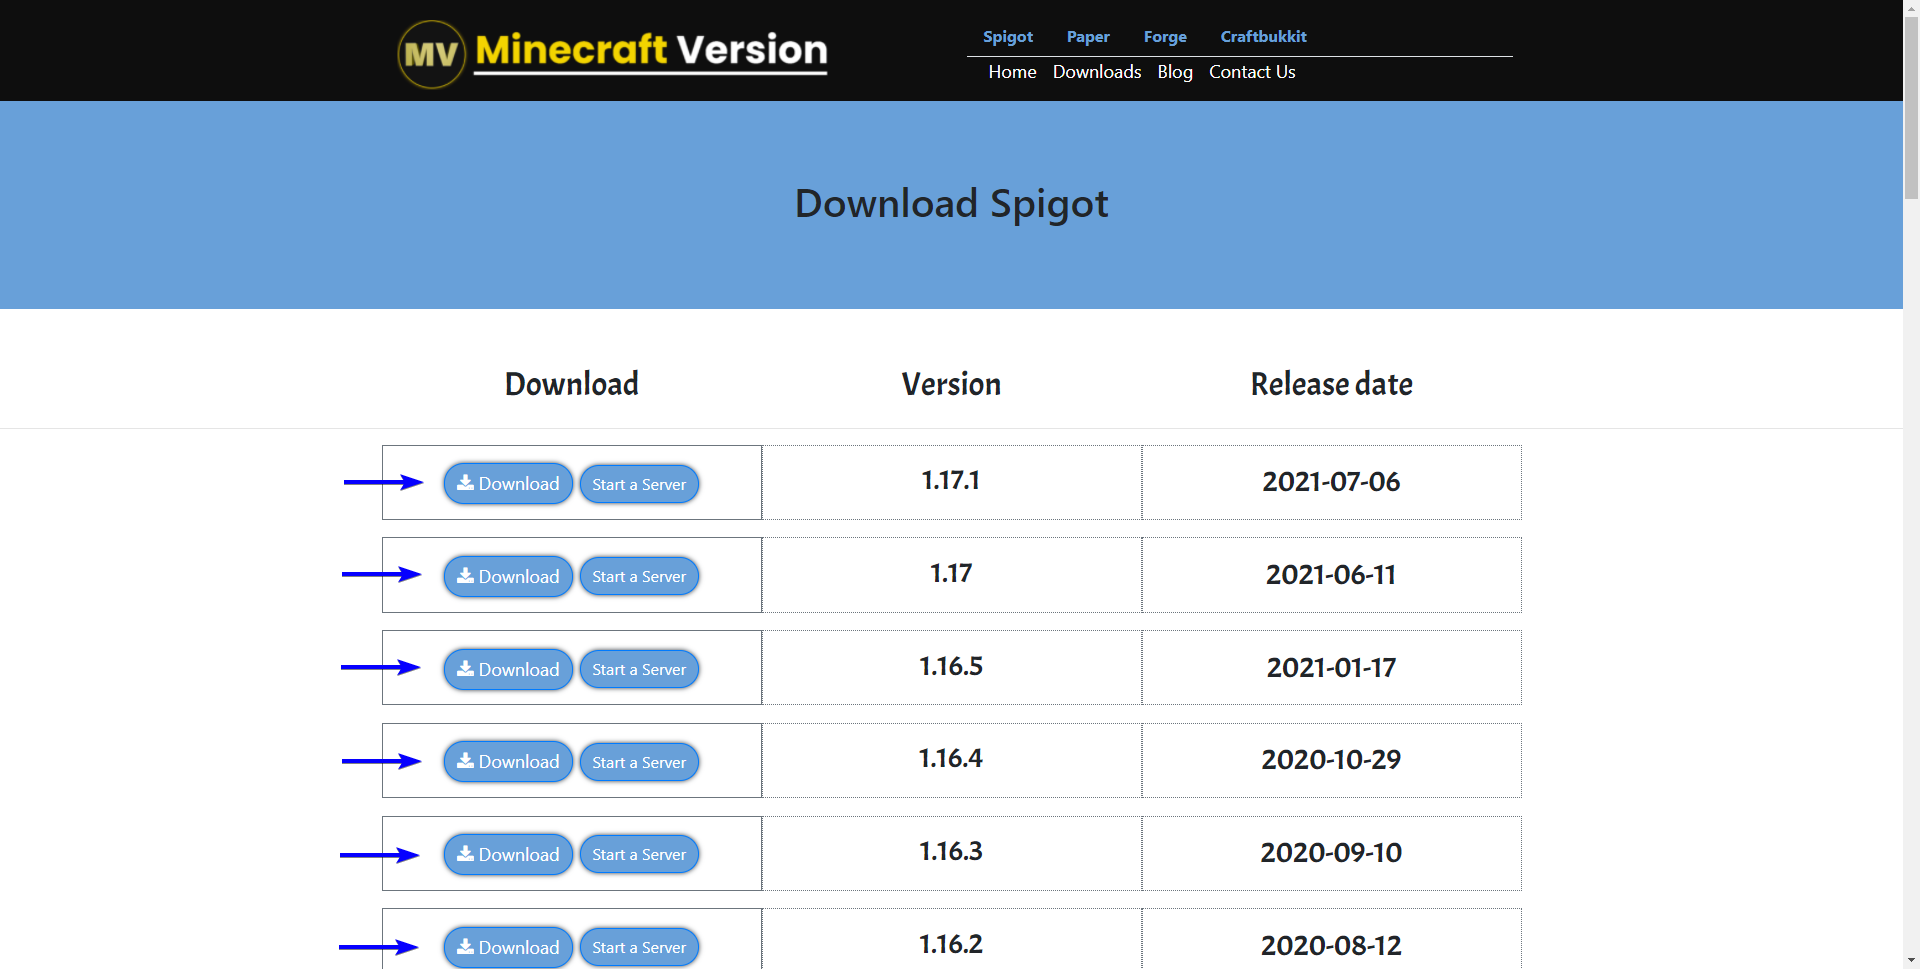 Download your Spigot version